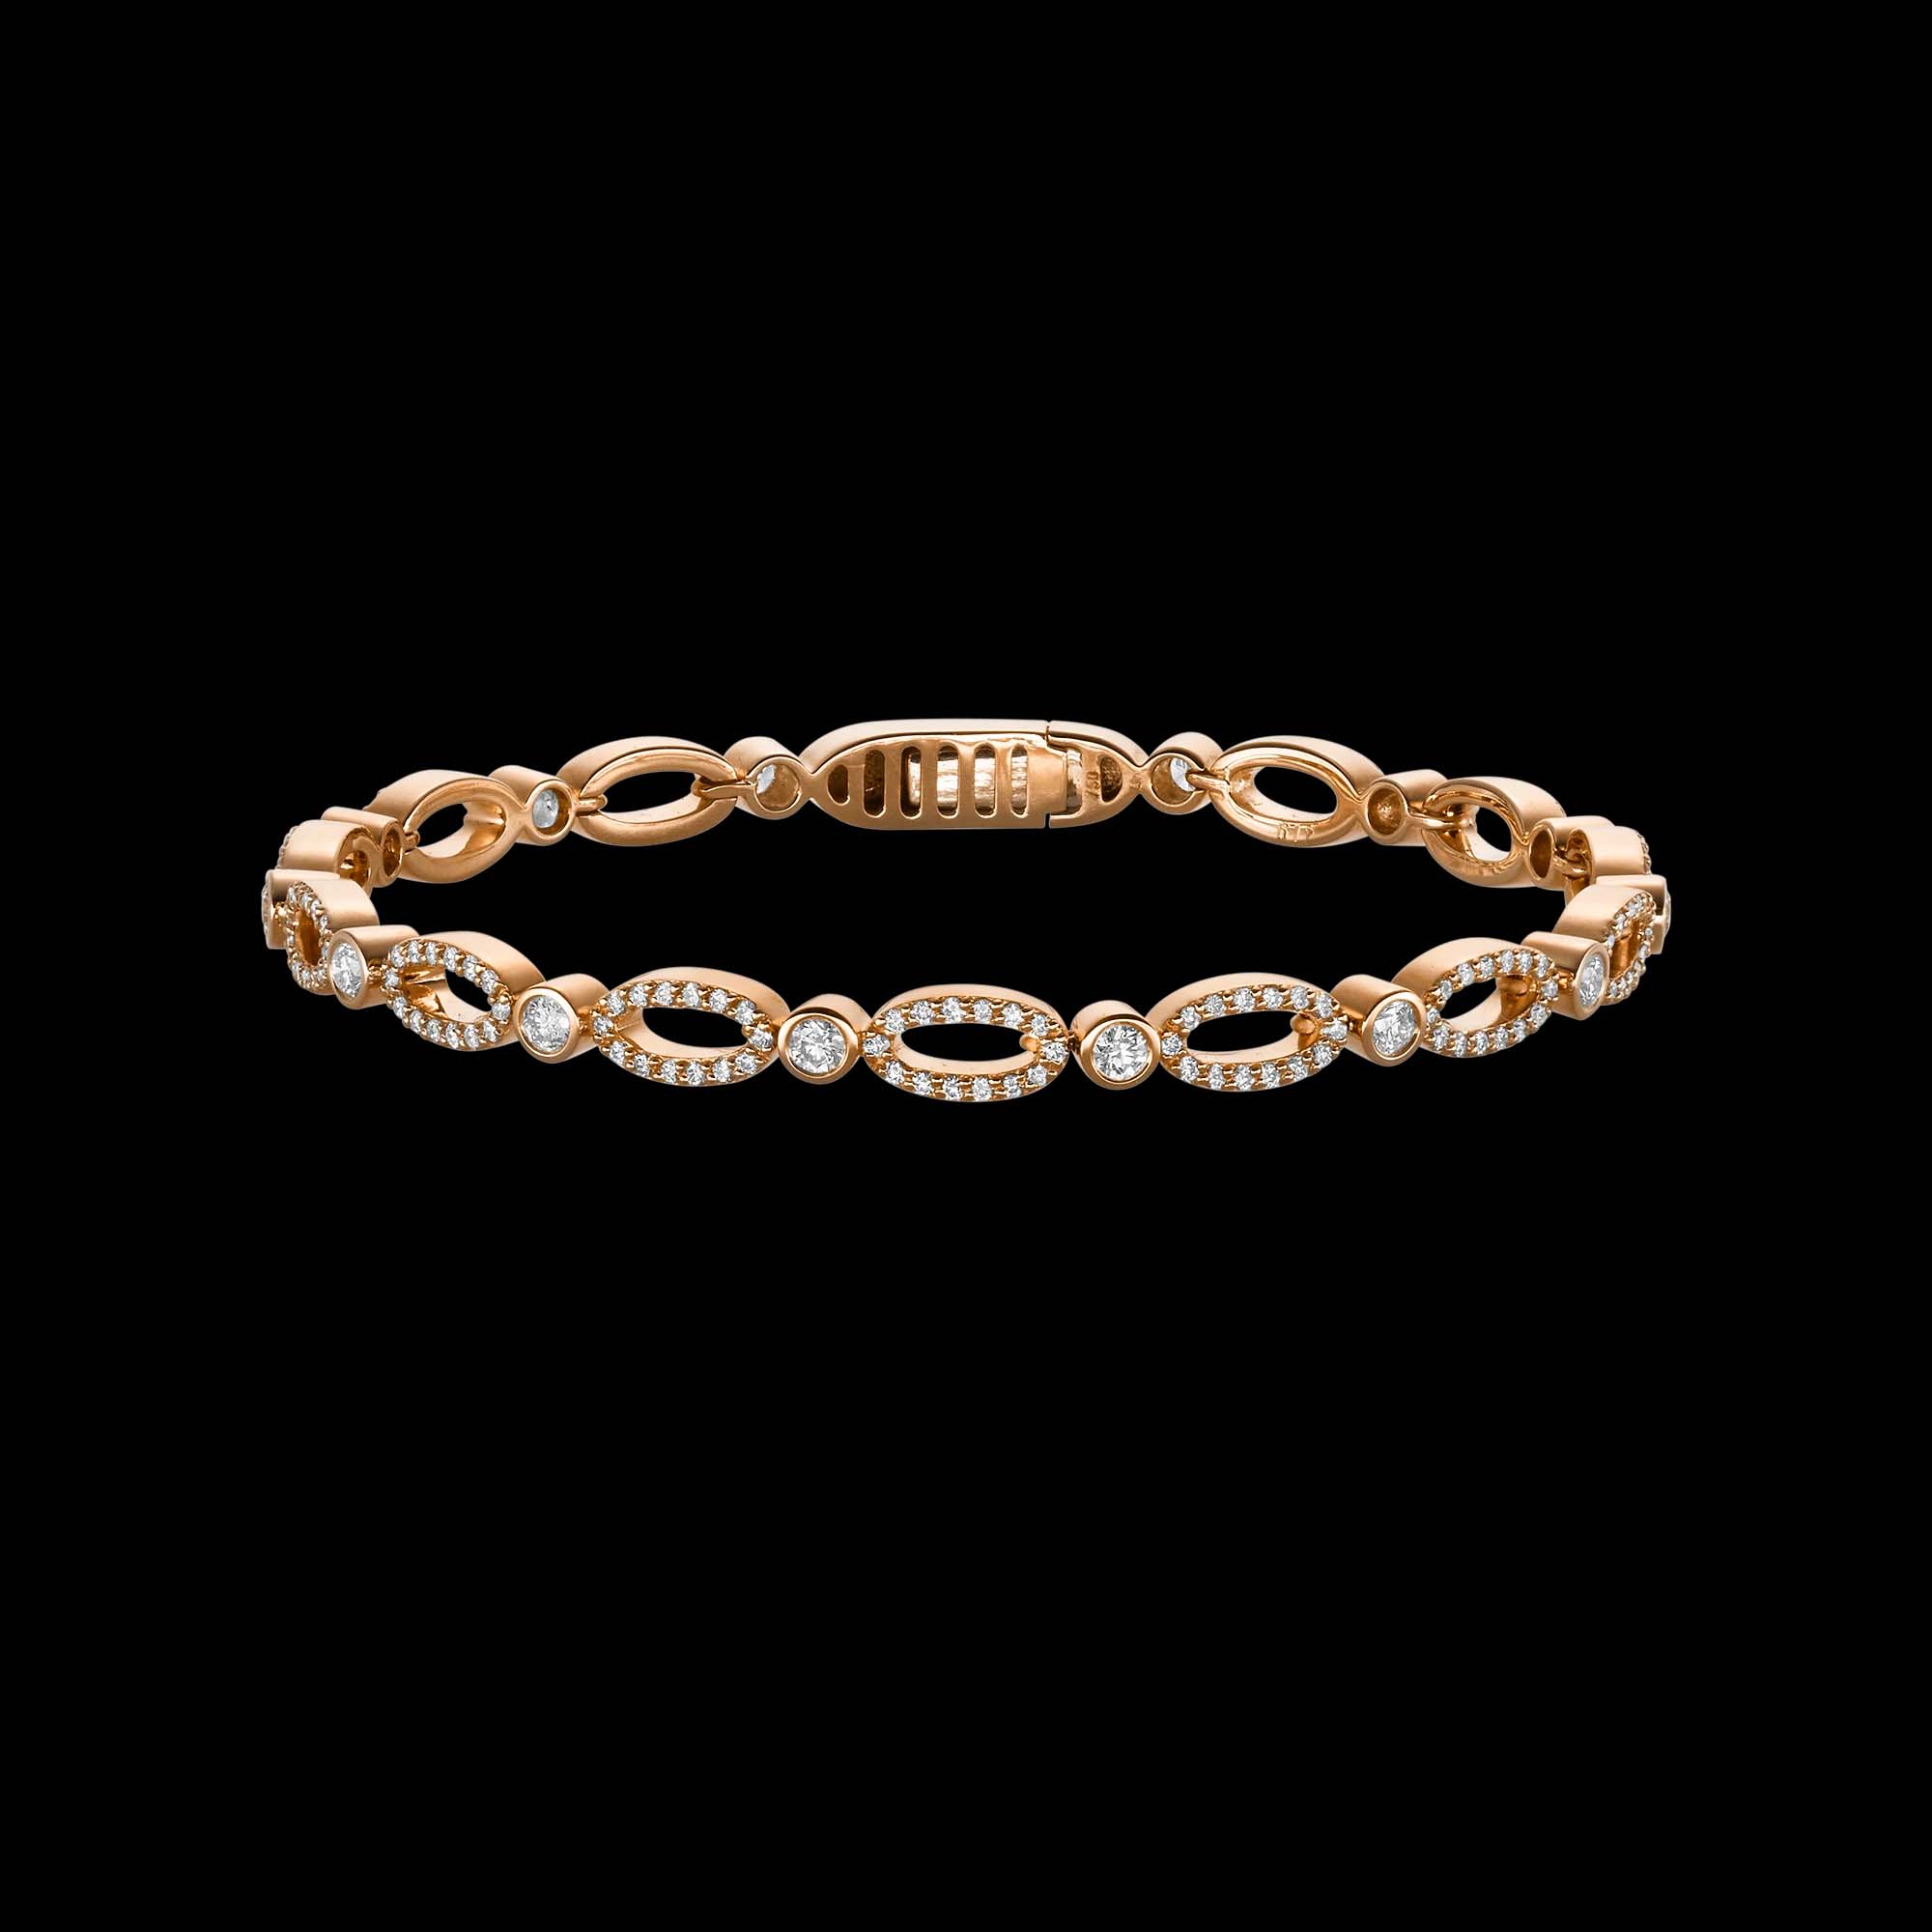 Custom design CZ rose gold bracelet chain is perfect